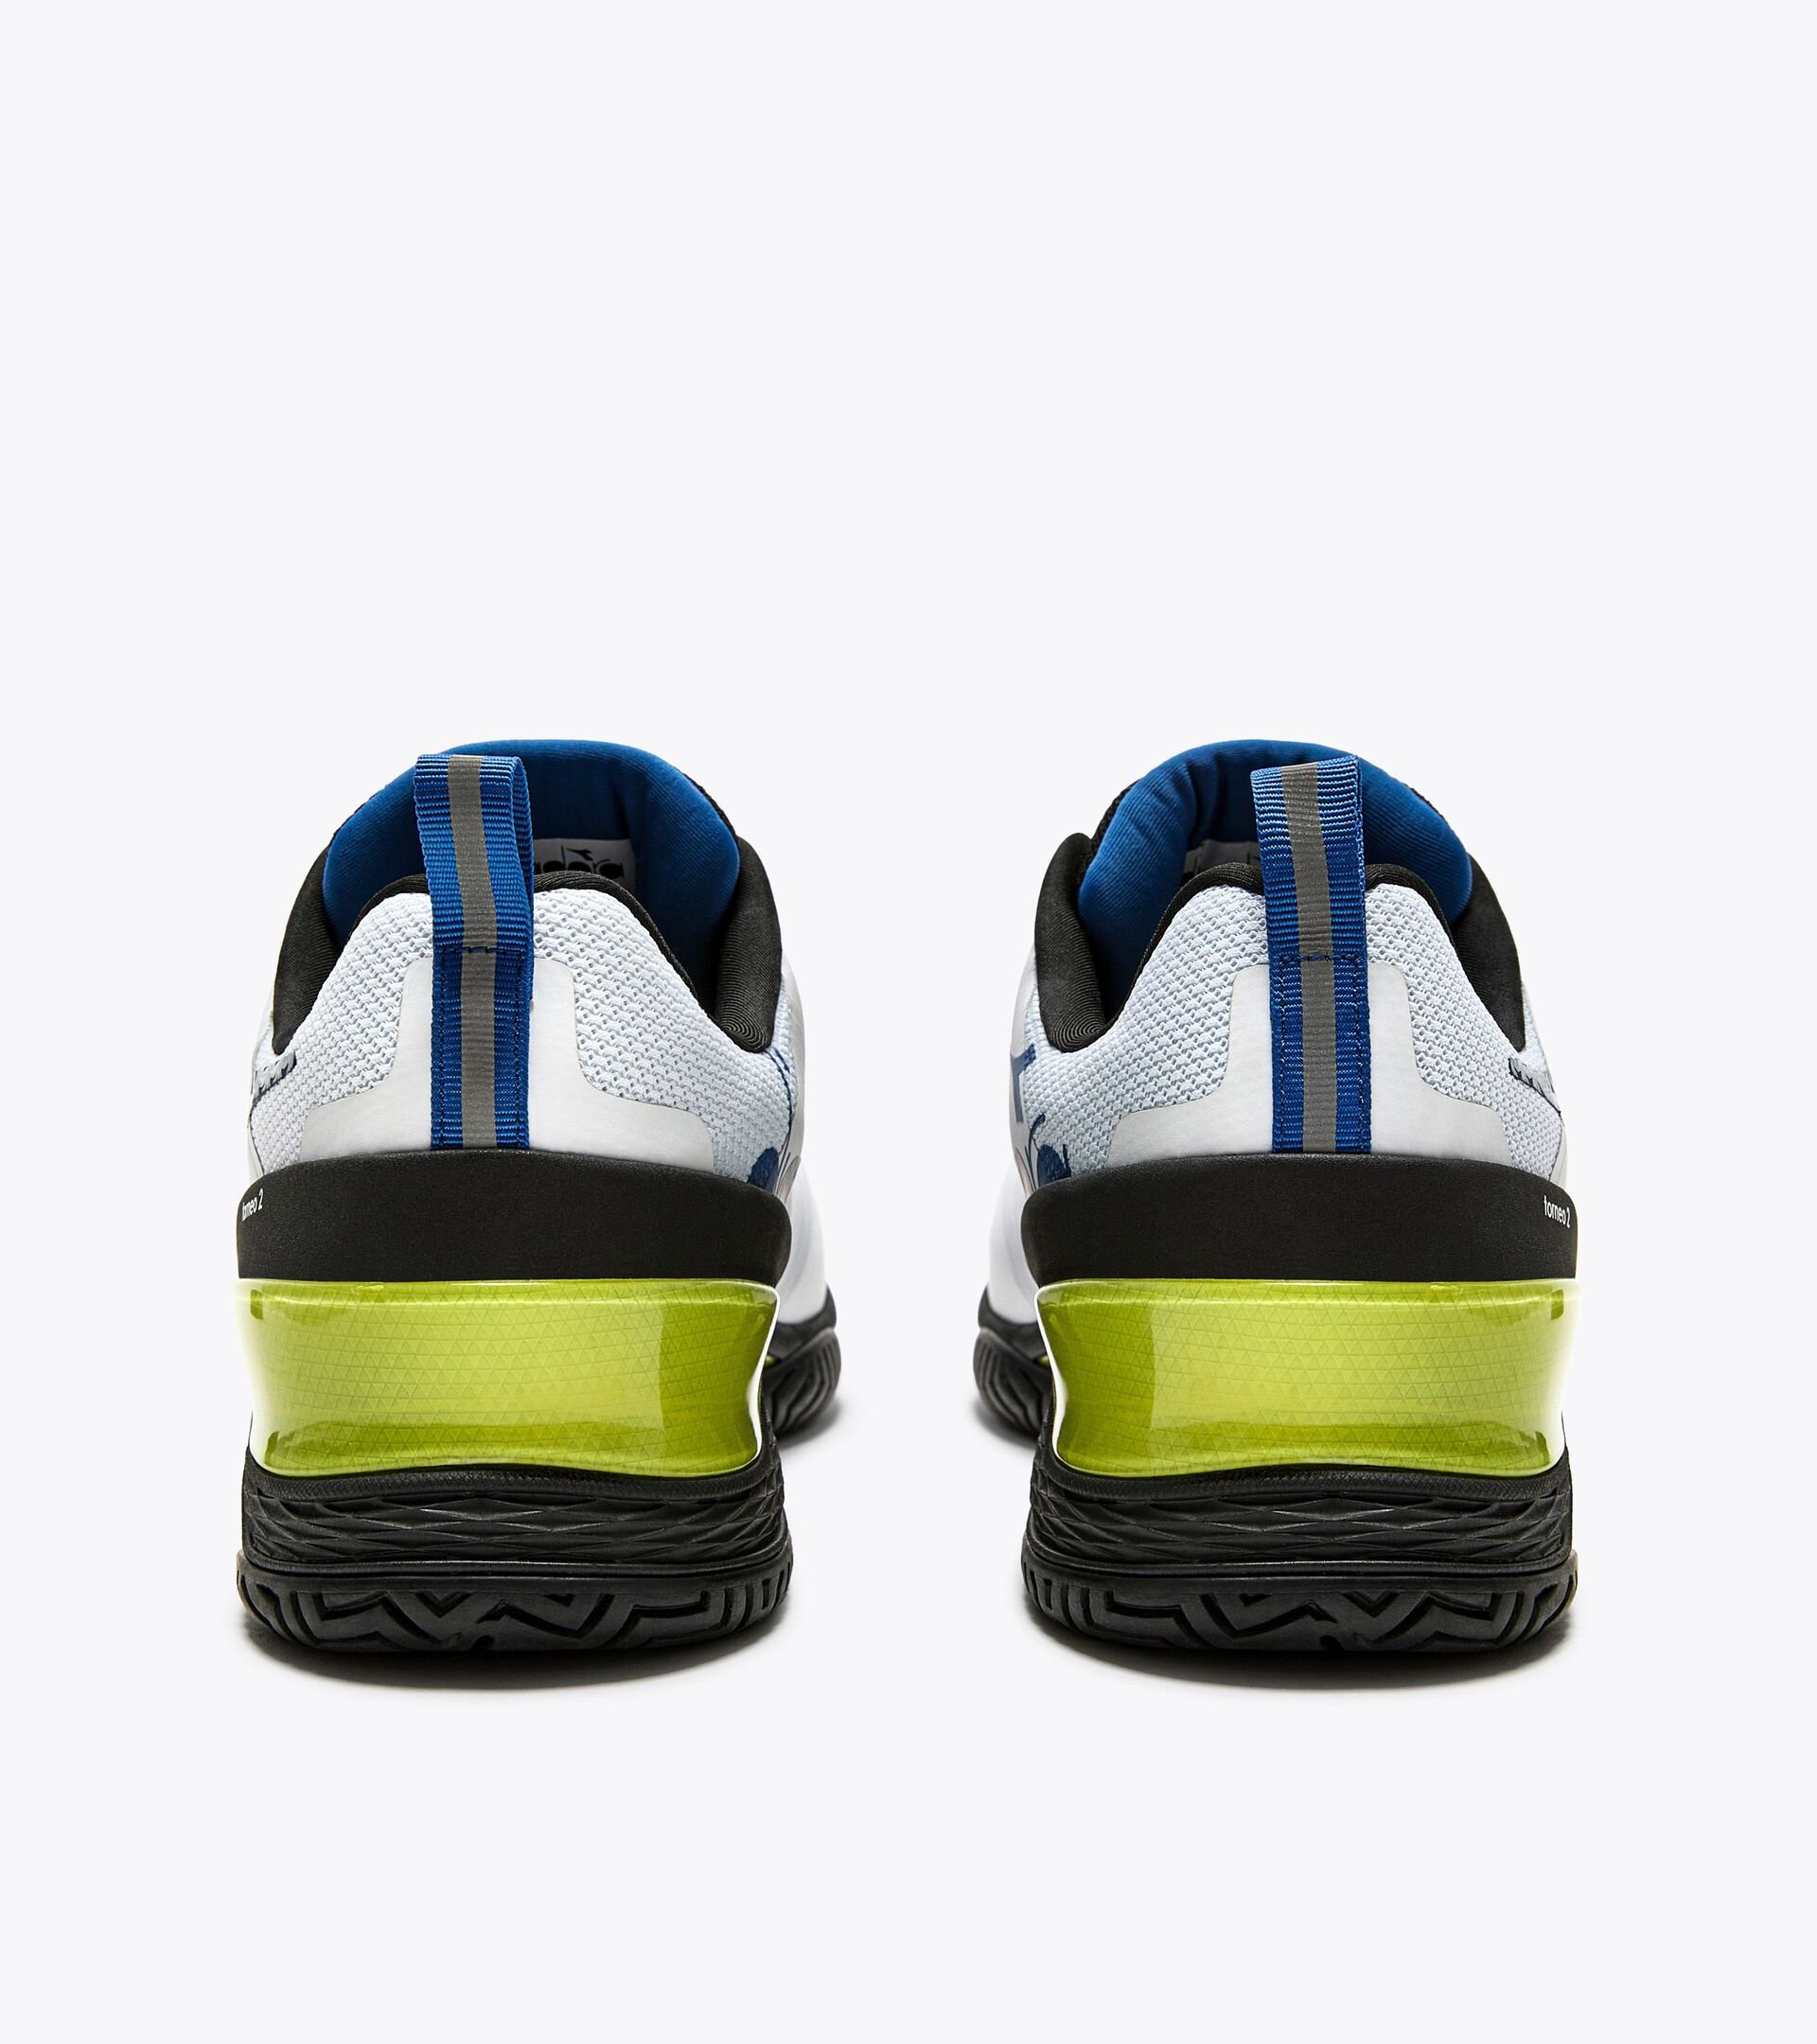 Tennis shoes for hard surfaces or clay - Men BLUSHIELD TORNEO 2 AG WHITE/DEJA VU BLUE/BLACK - Diadora